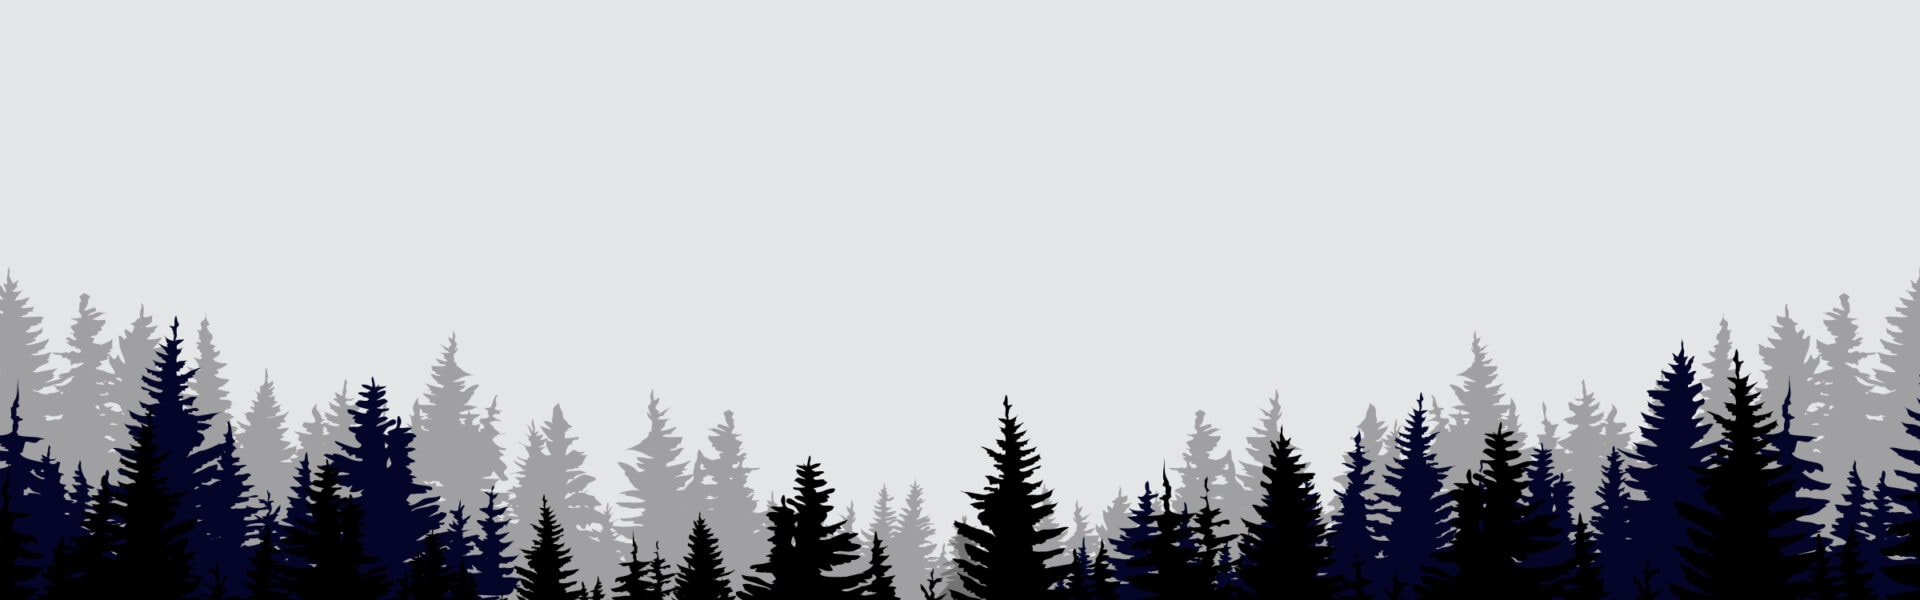 black and white pine trees